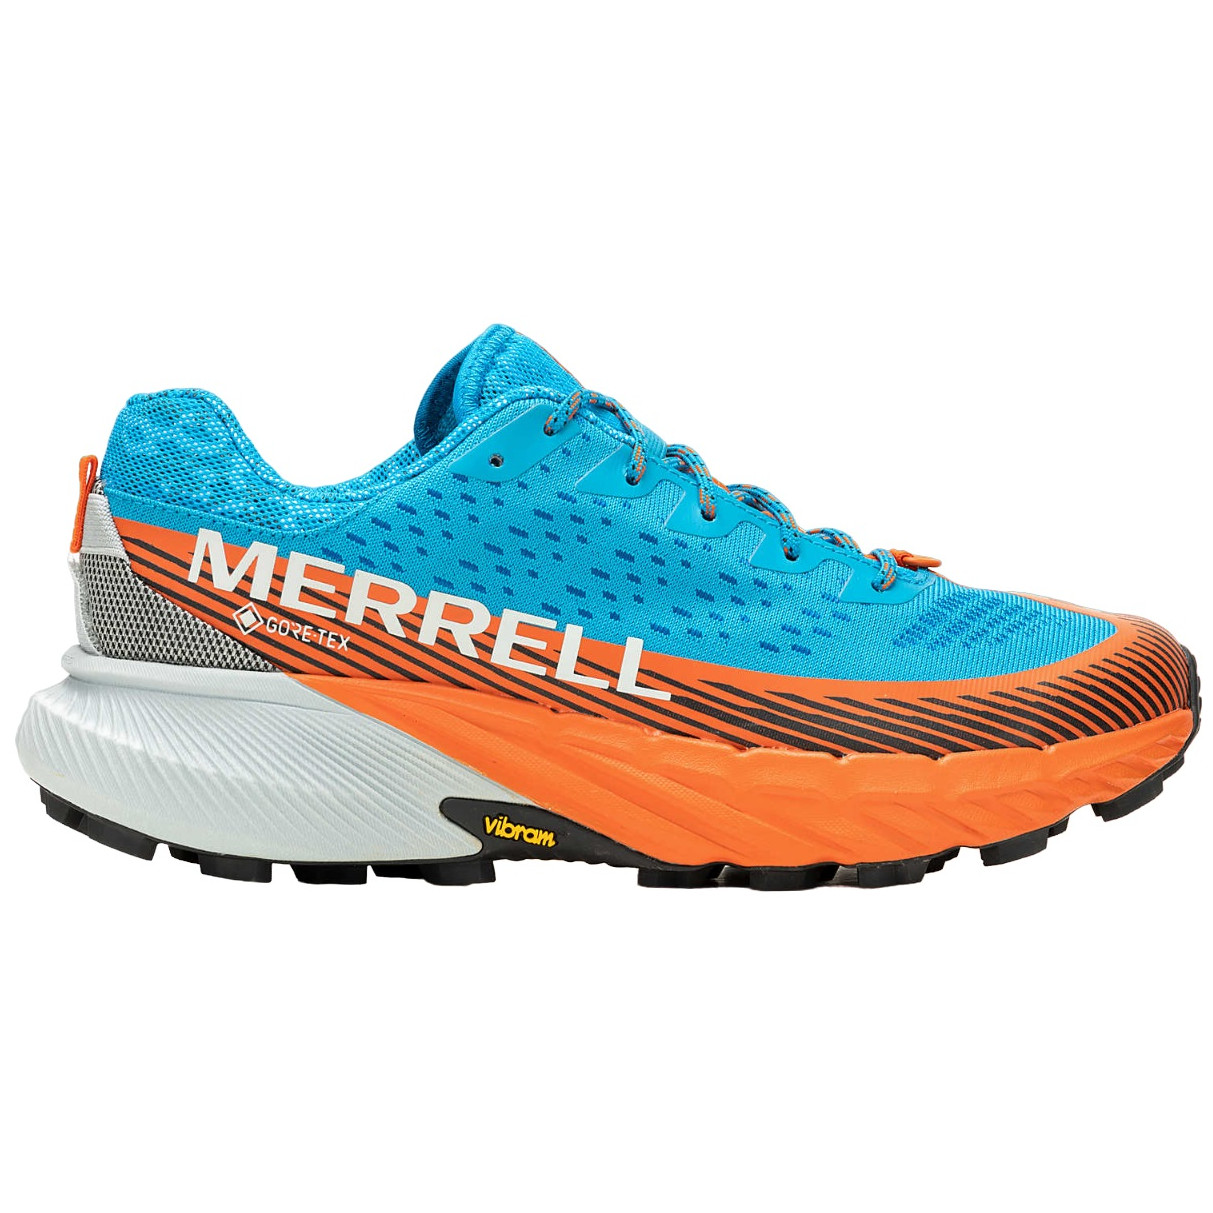 Pánské běžecké boty Merrell Agility Peak 5 Gtx Velikost bot (EU): 46 / Barva: modrá/oranžová